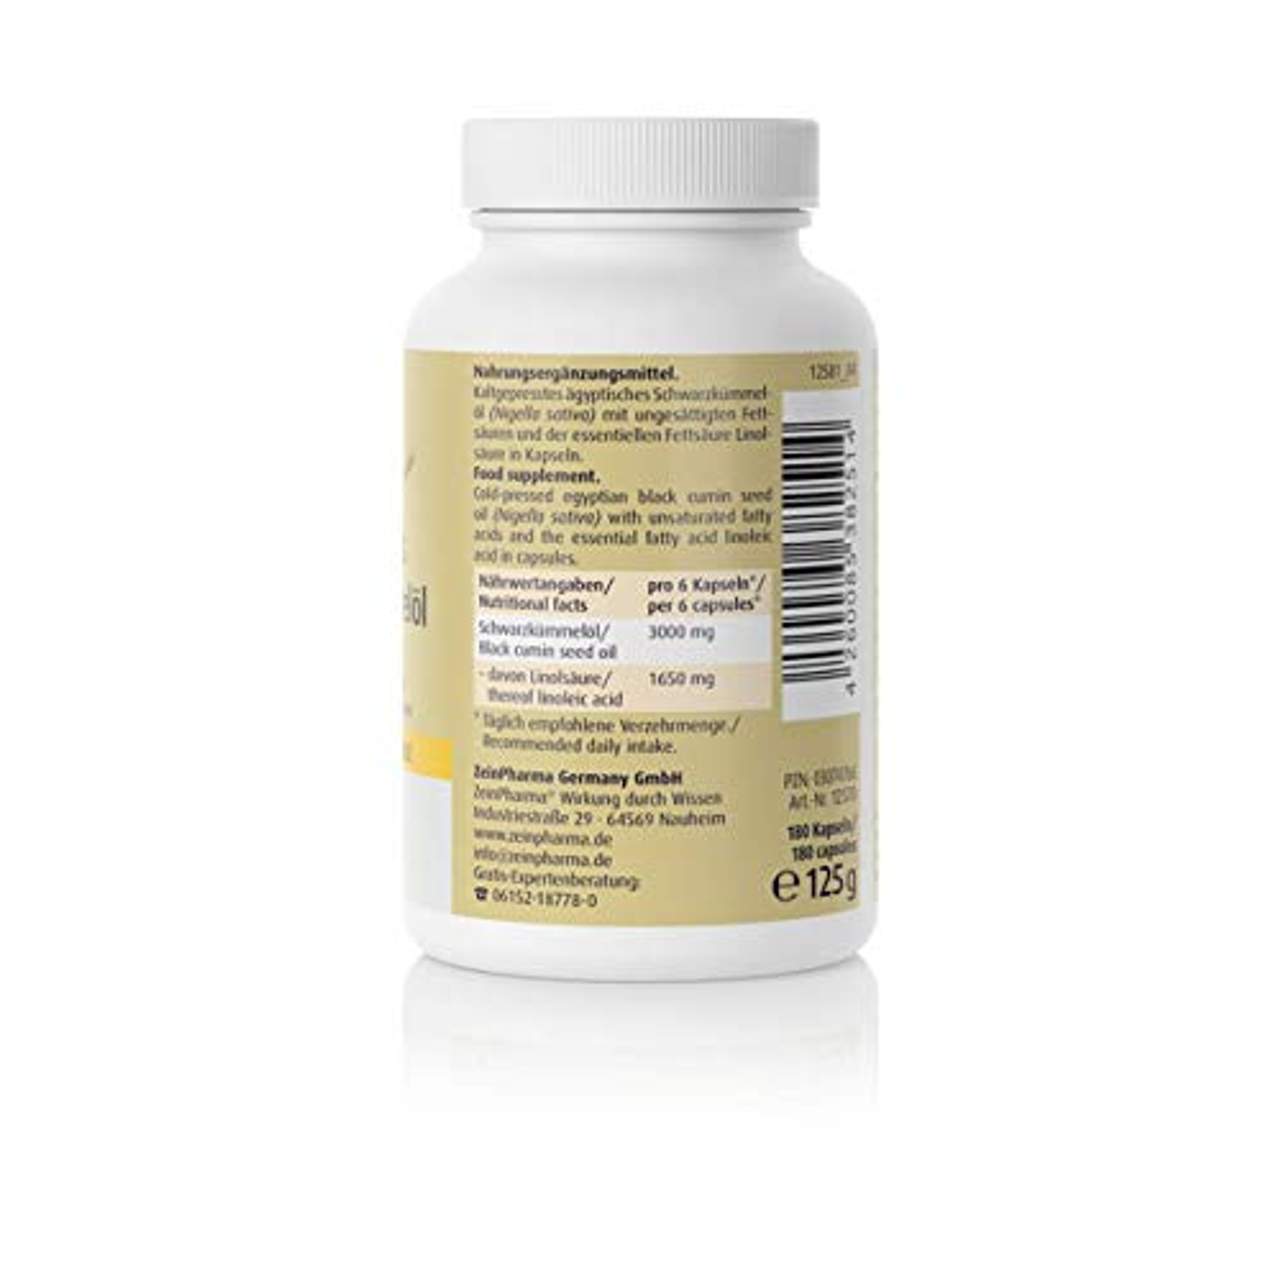 ZeinPharma Ägyptisches Schwarzkümmelöl Softgel-Kapseln 500 mg